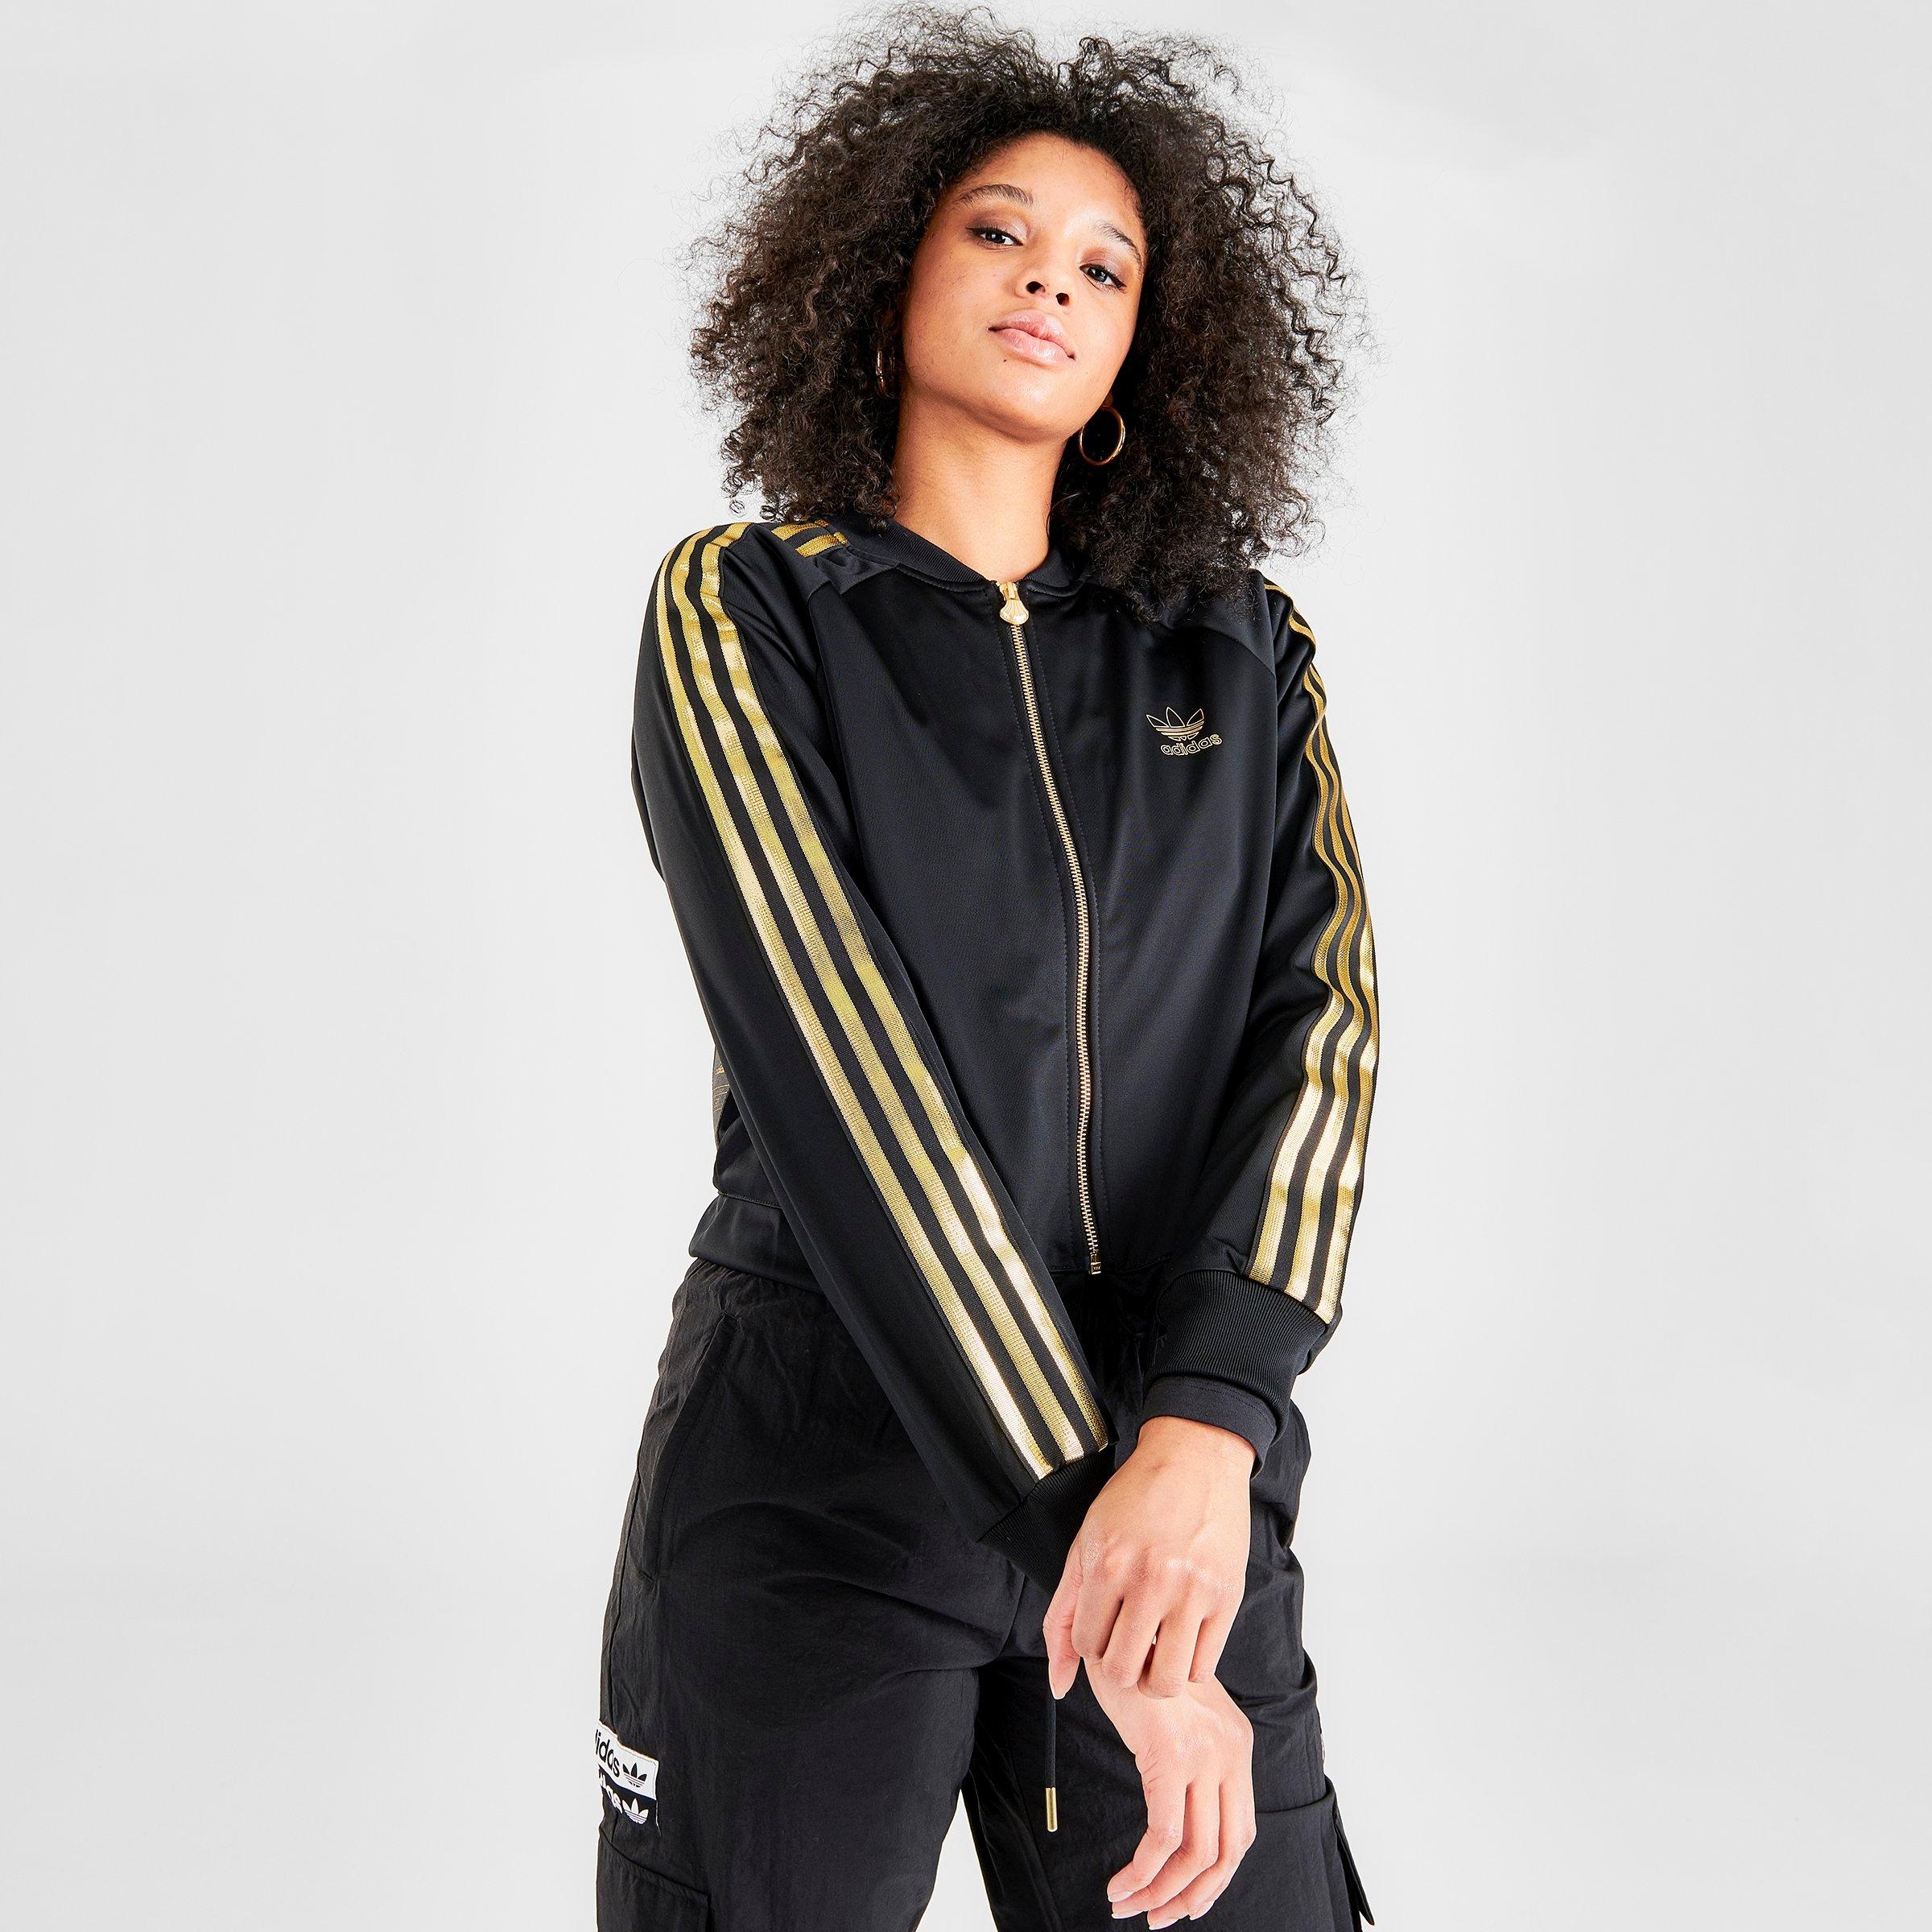 black adidas jacket with gold stripes